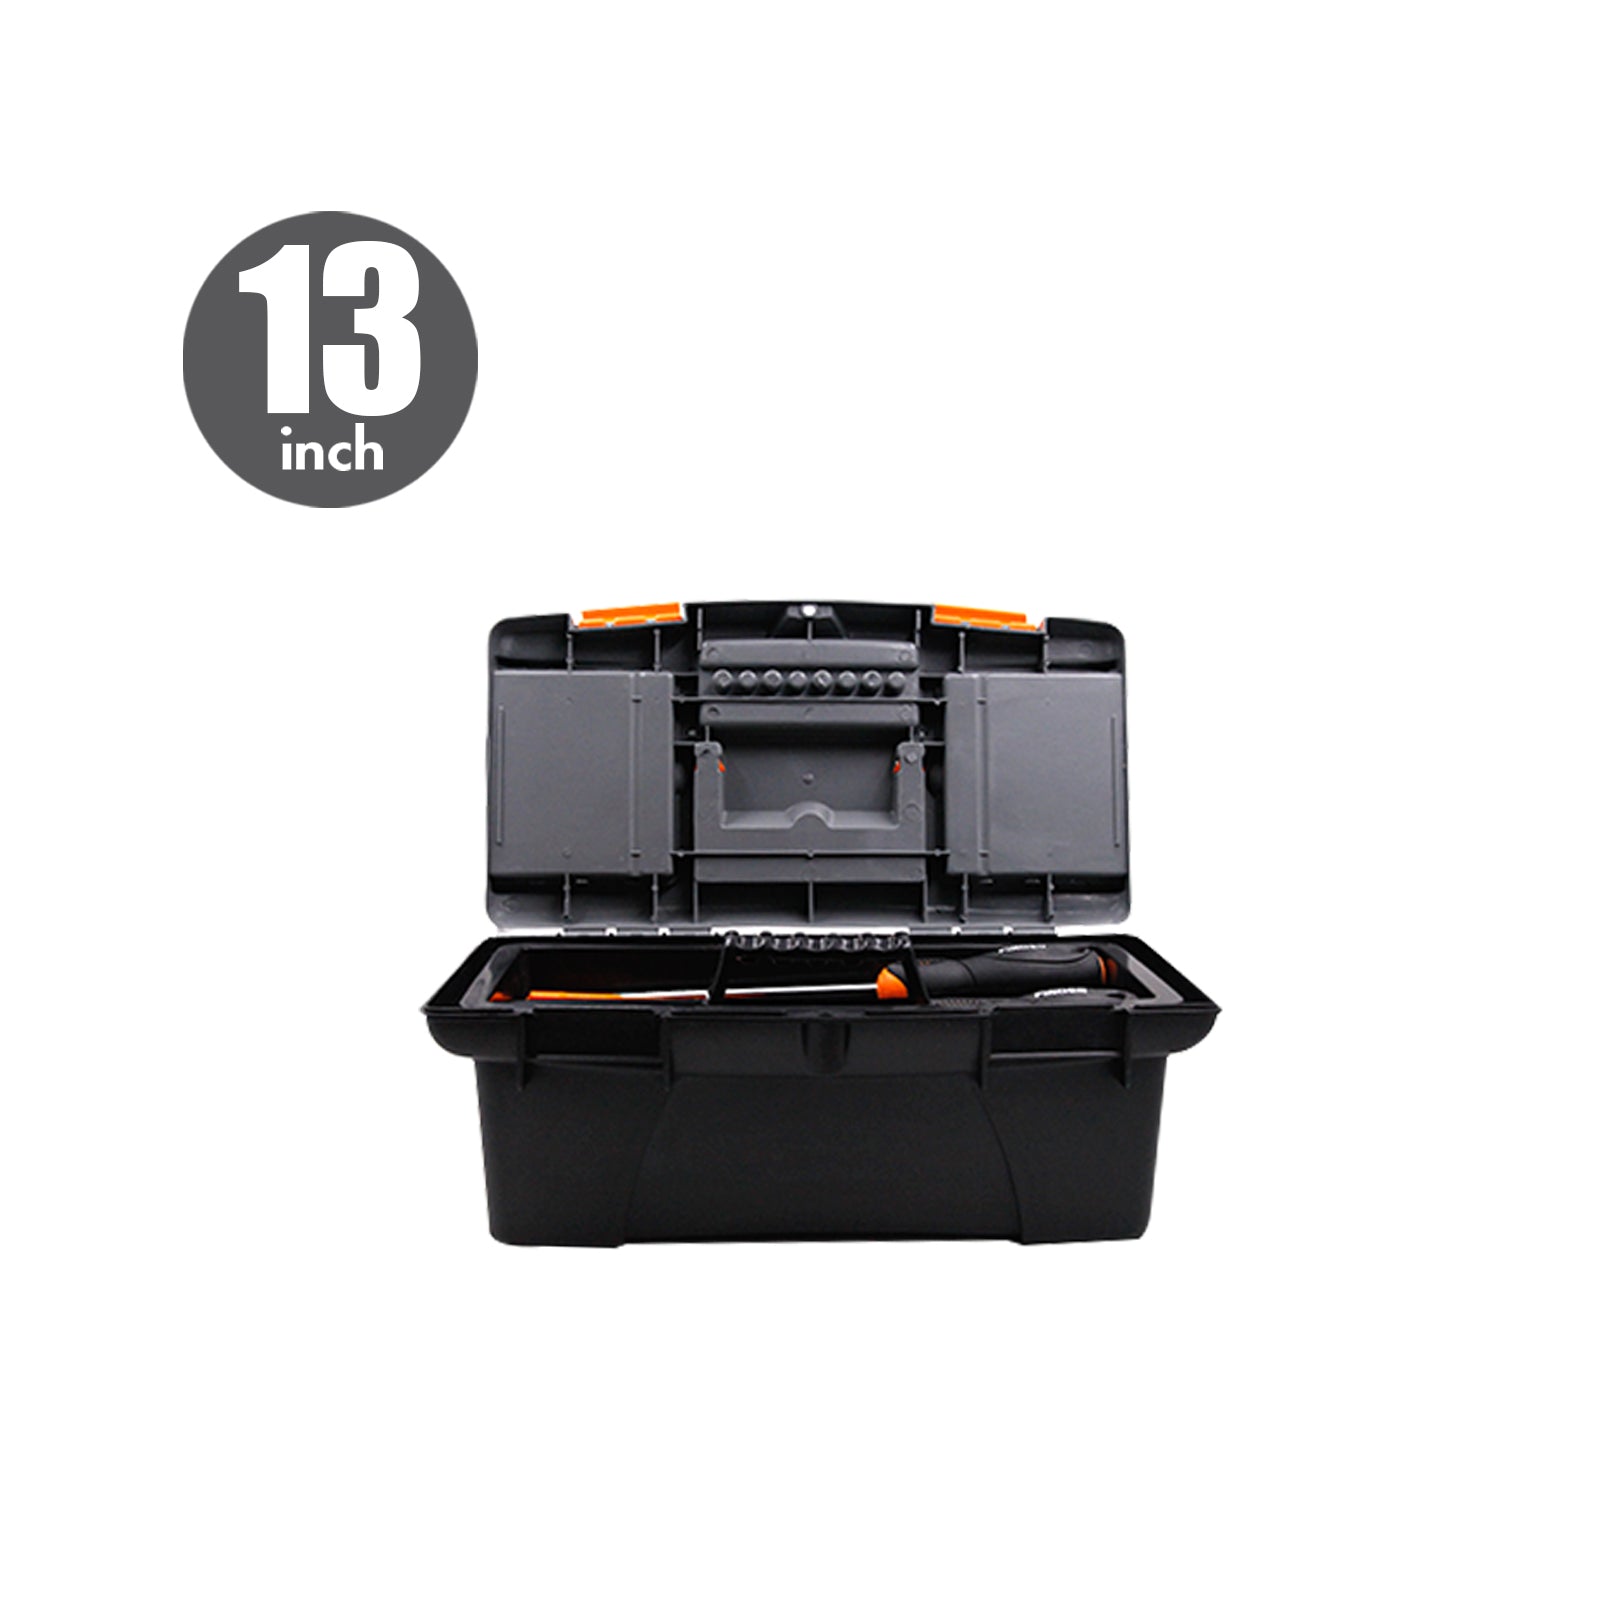 HOUZE - FINDER - Plastic Tool box (13 Inch)